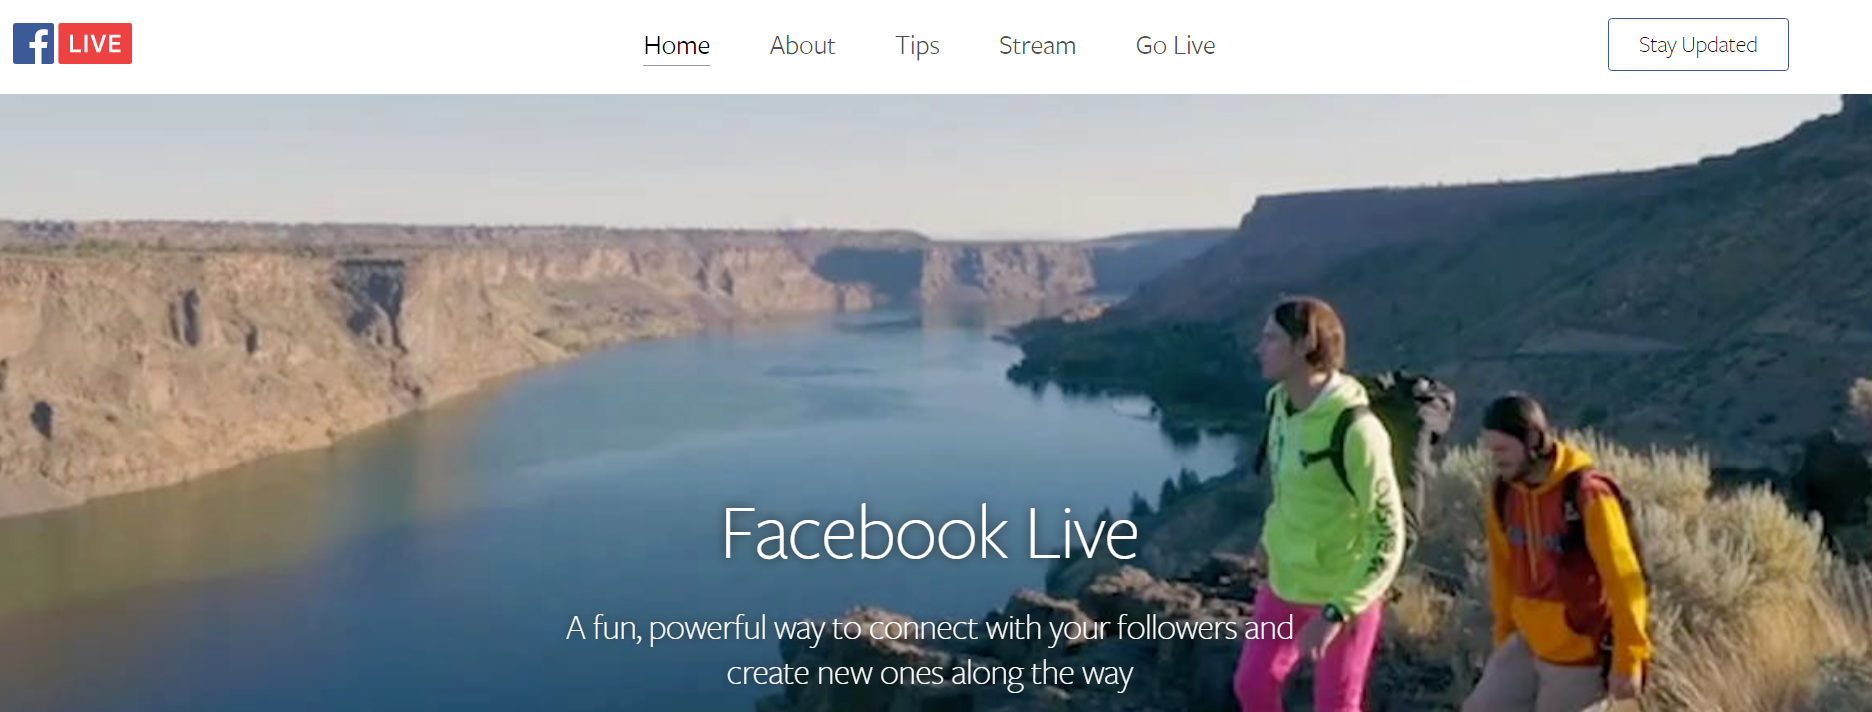 Facebook Live- Facebook Live Broadcast